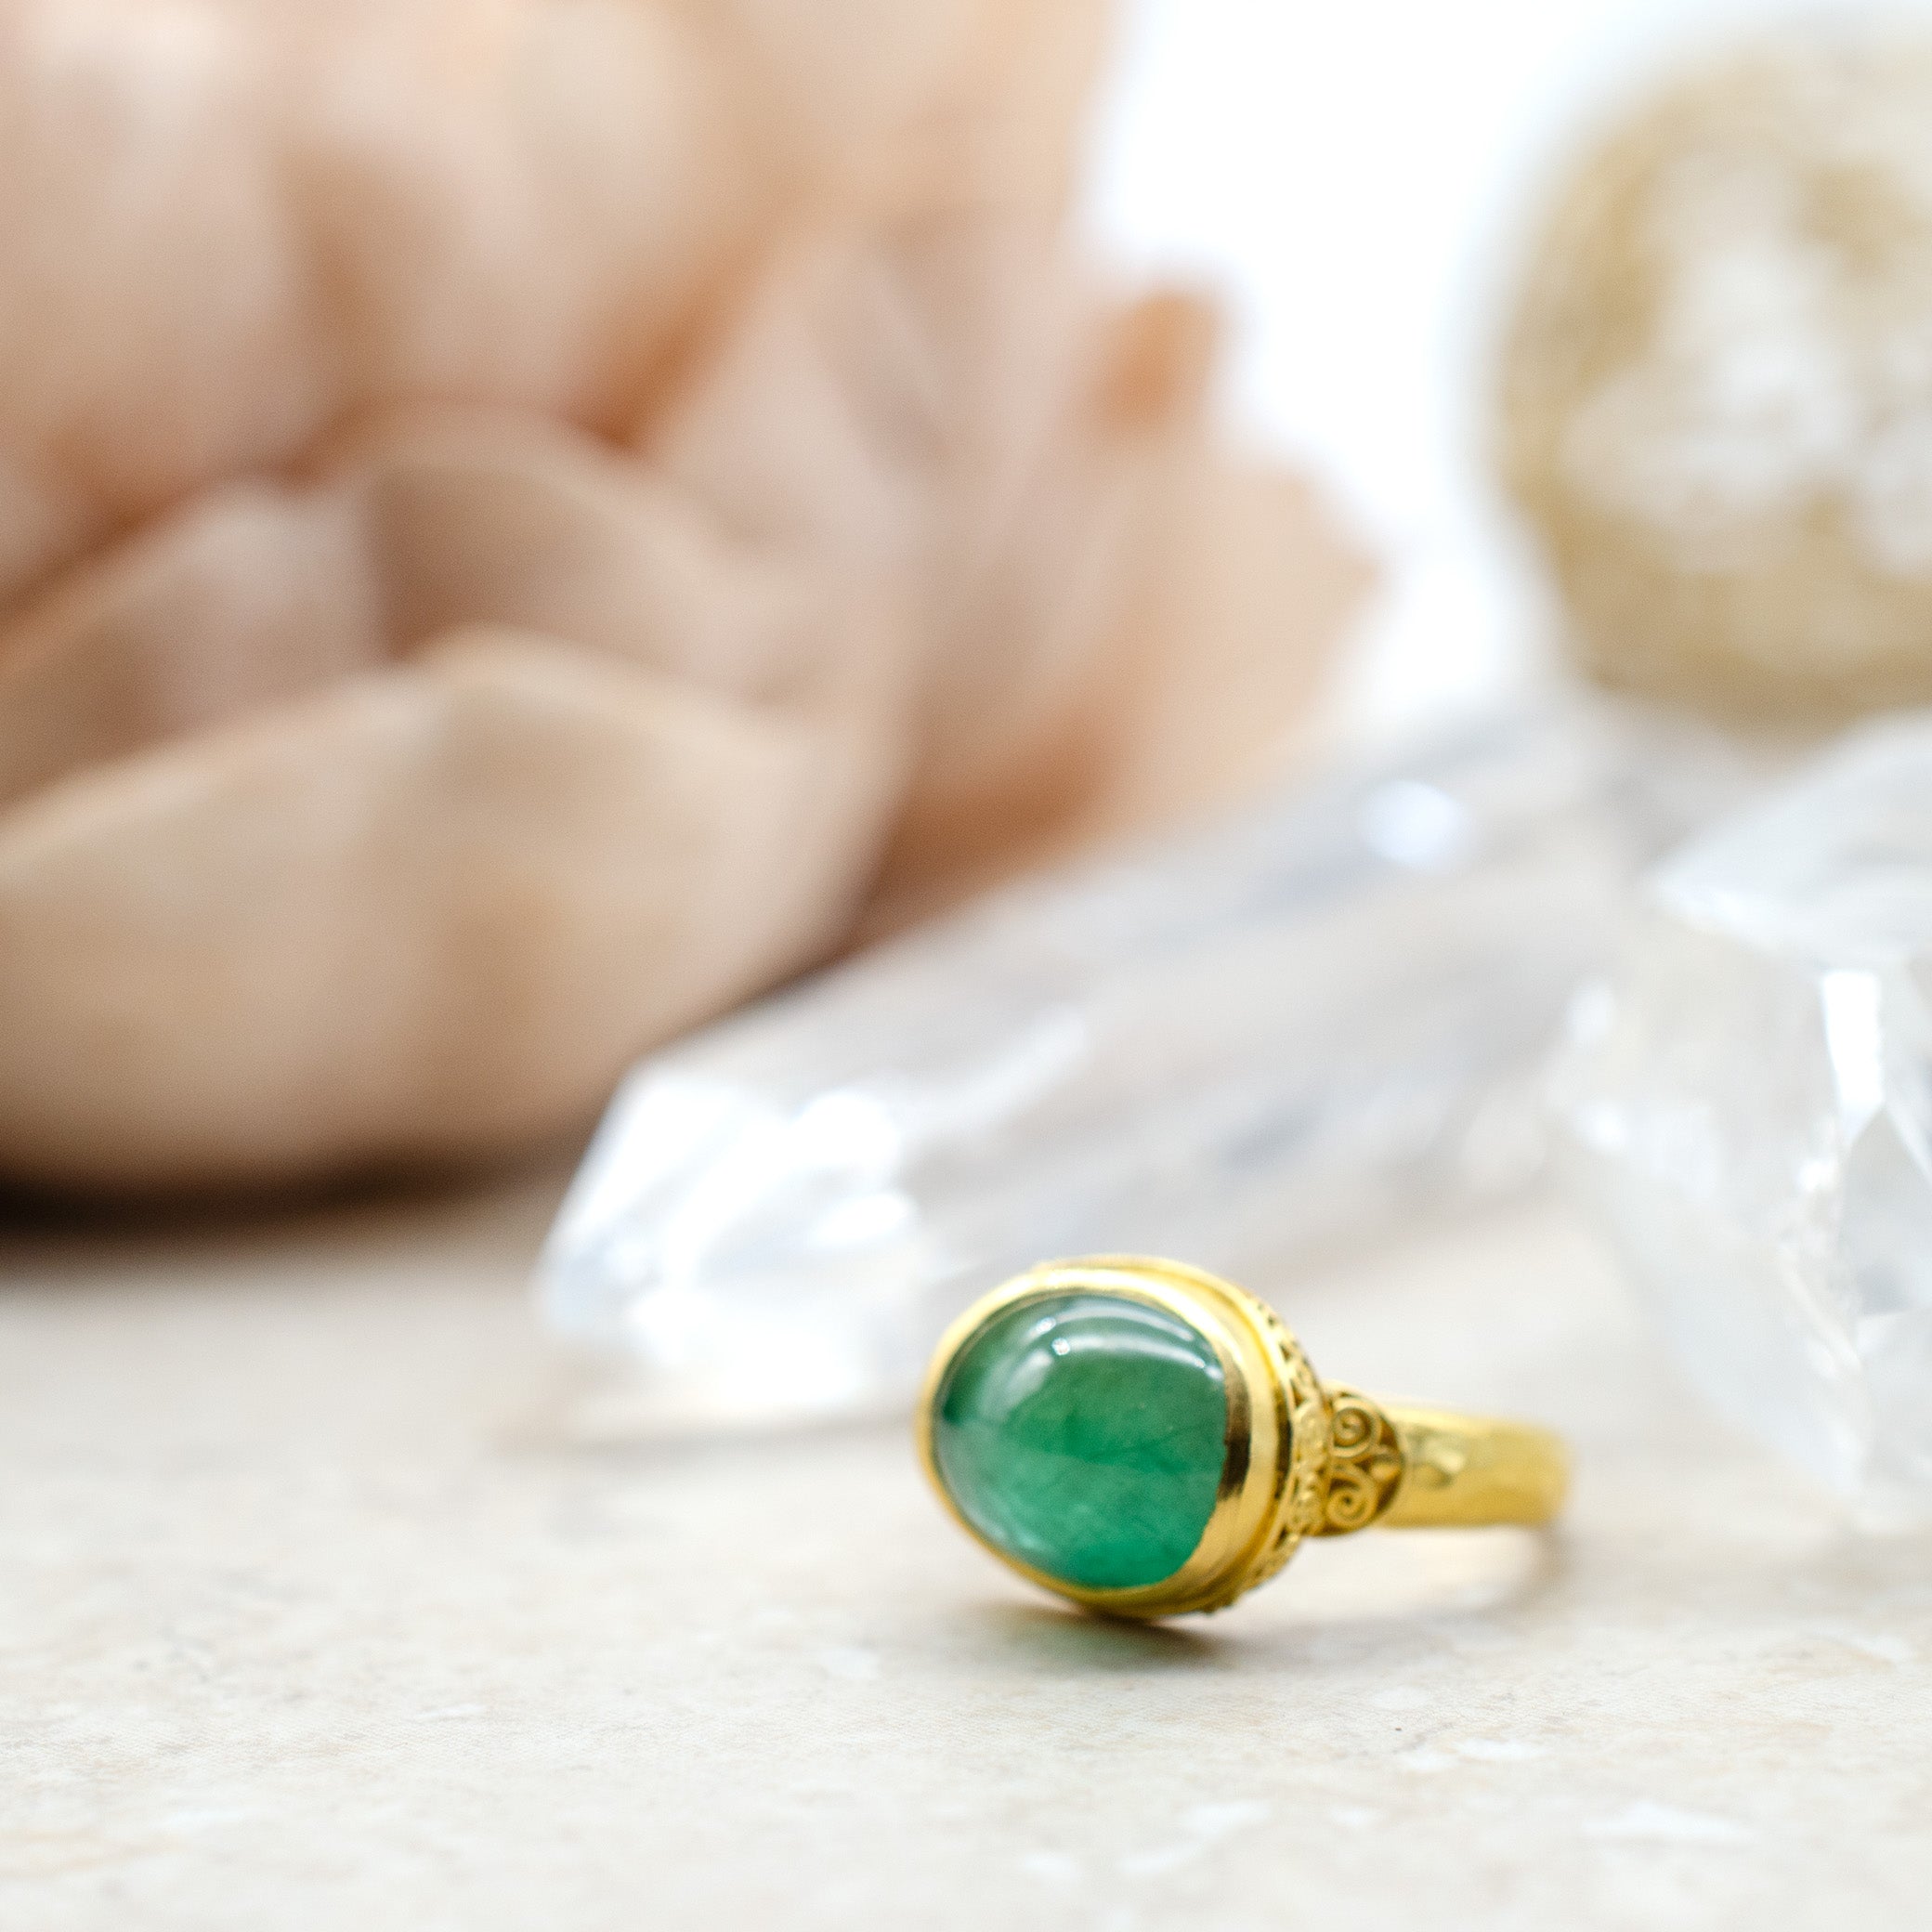 5ct Cabochon Emerald Ring